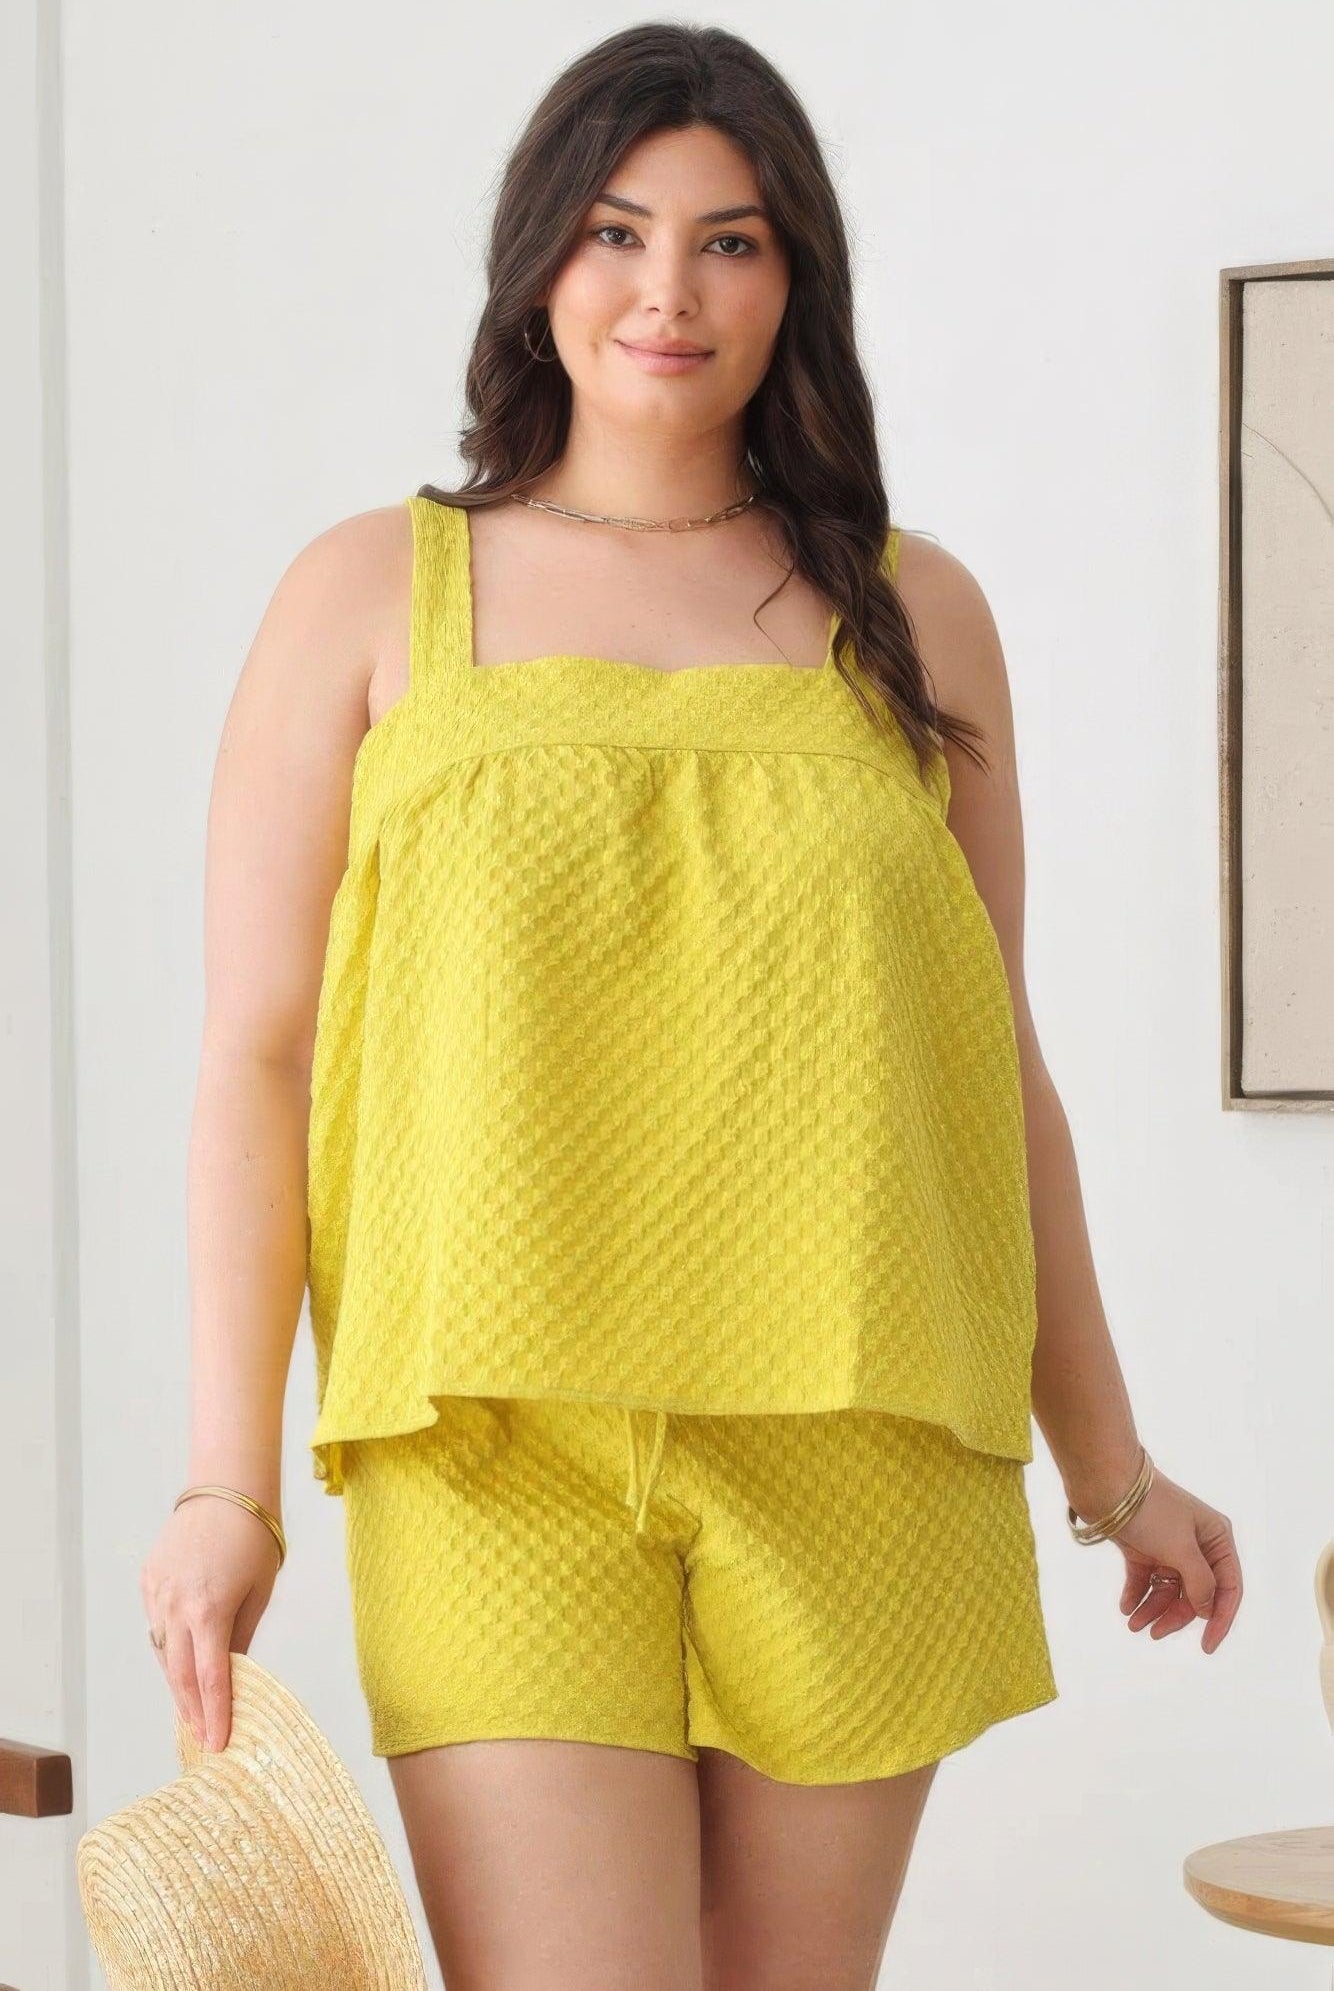 Women's Shorts Plus Size Textured Top Elastic Waist Short Sets - Yellow